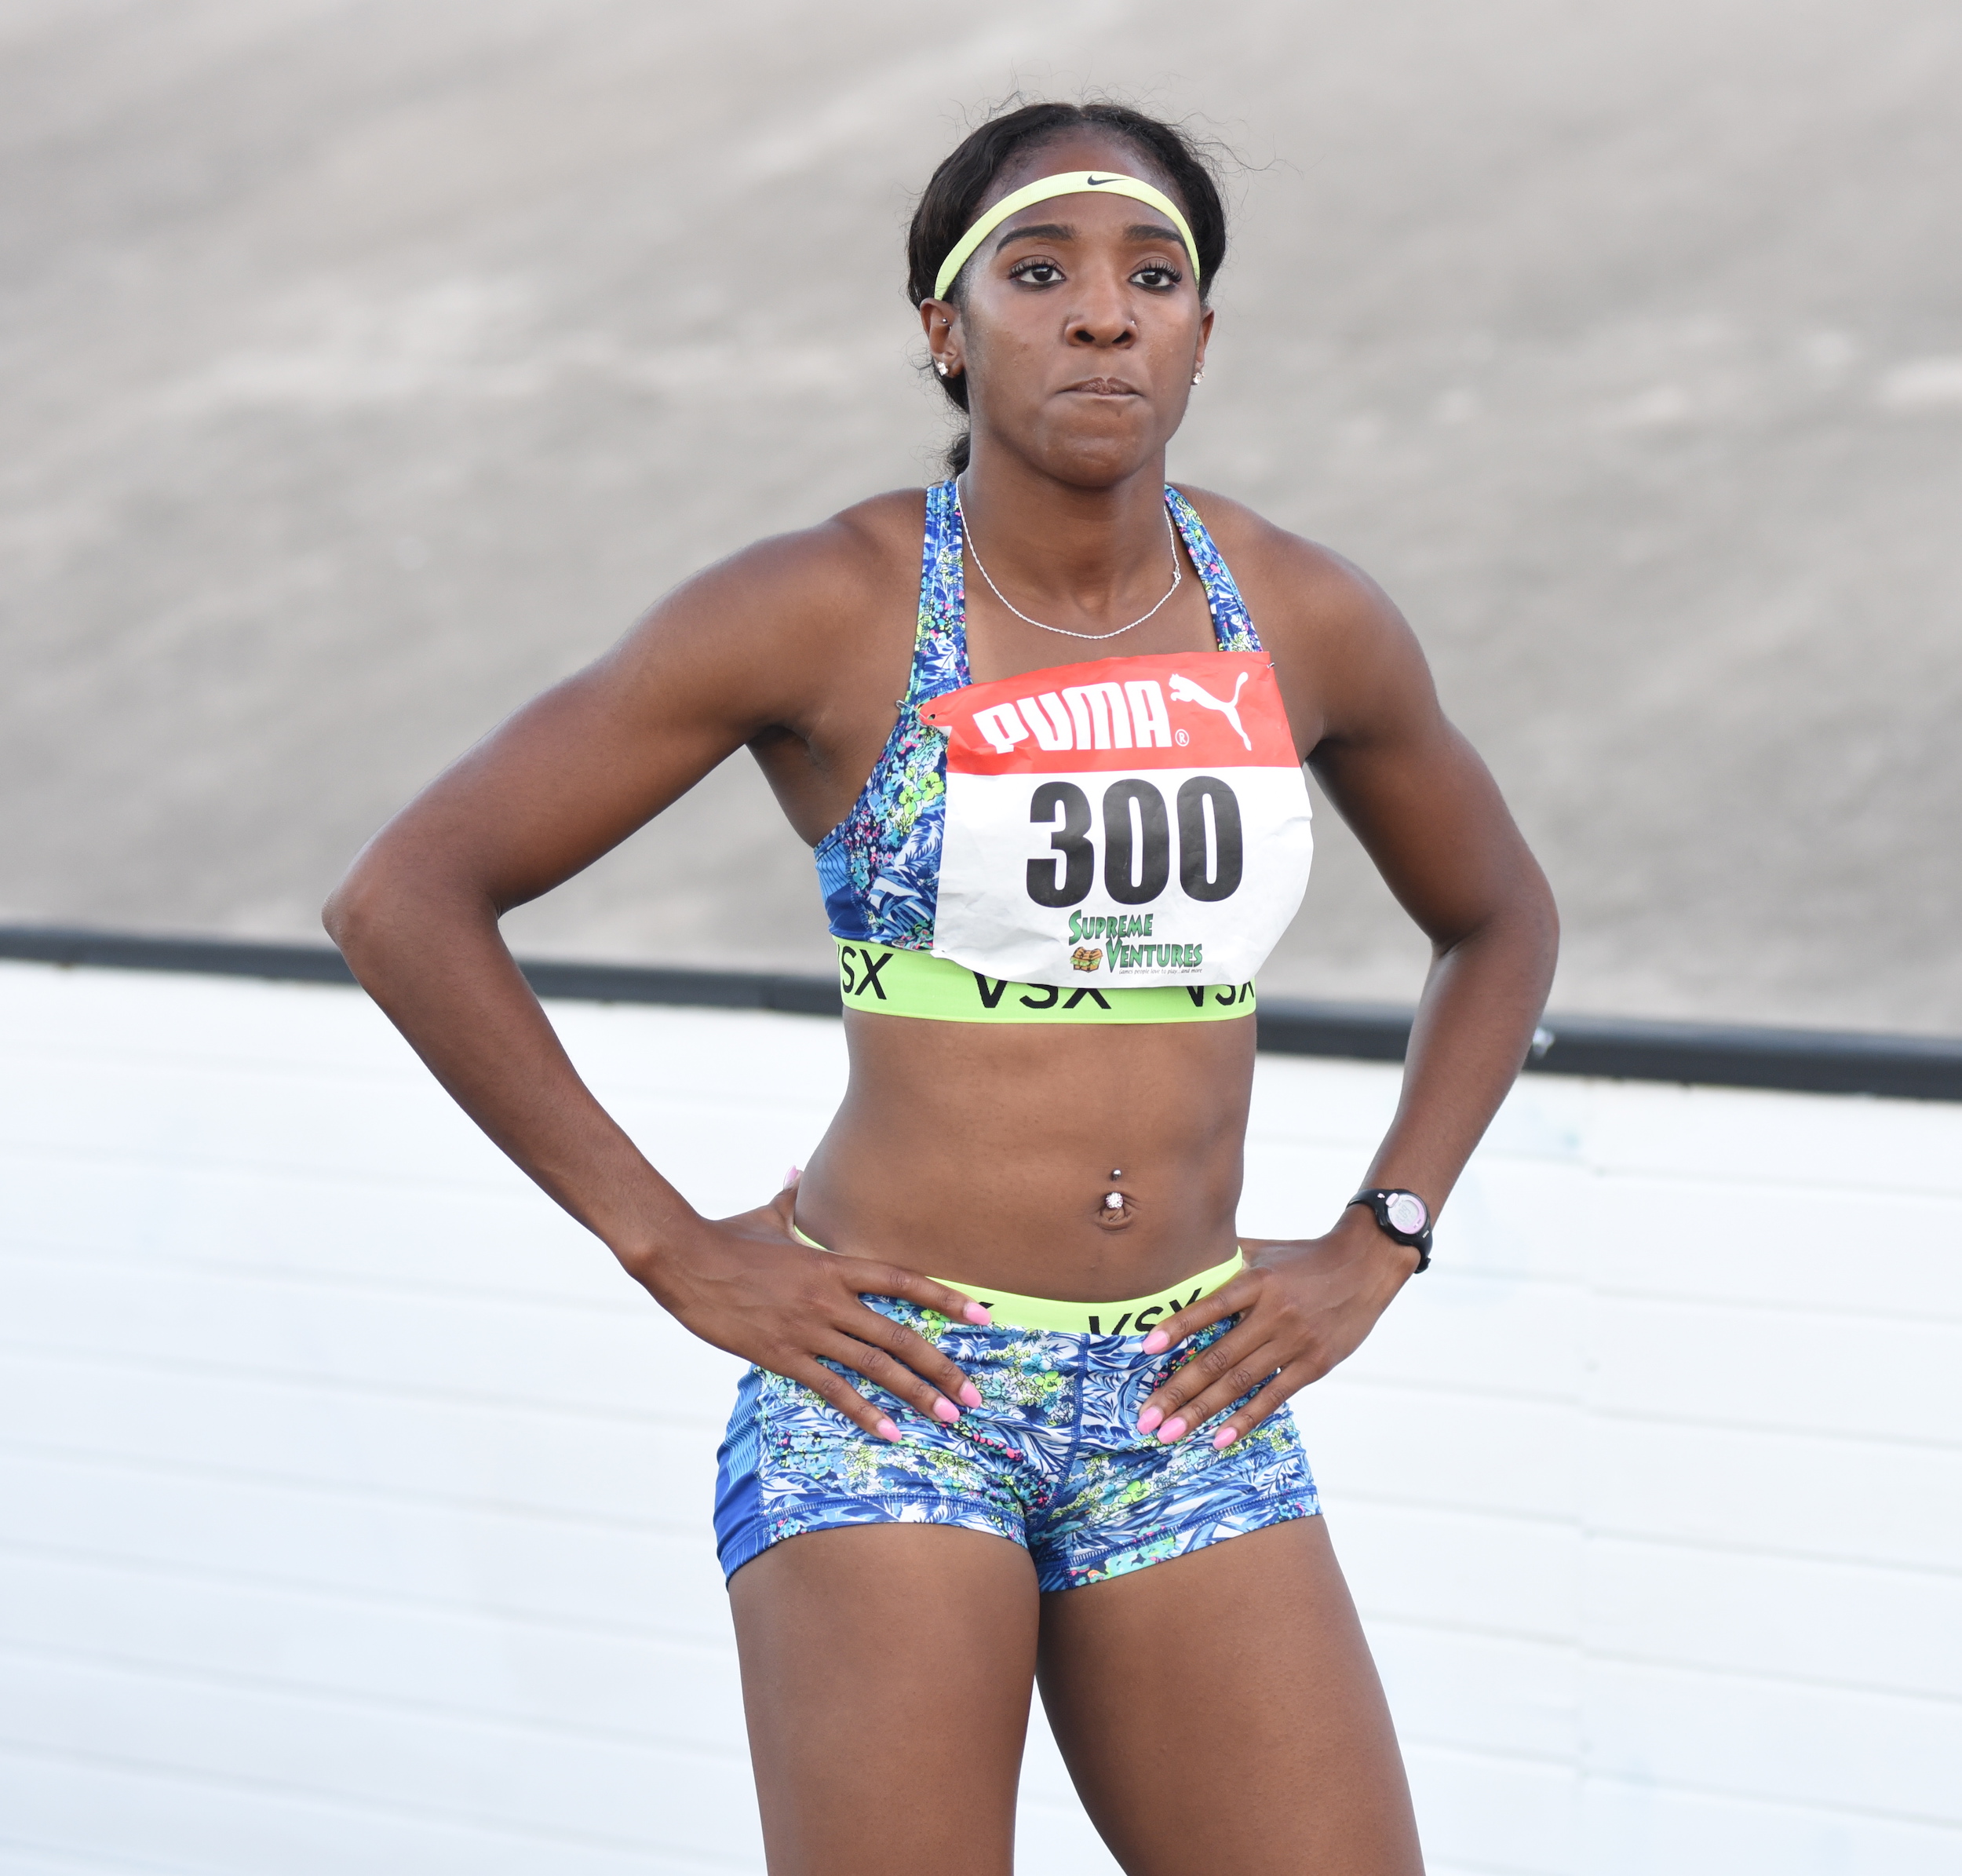 Women’s hurdles, men’s 100m, 400m to highlight Guadeloupe International Meeting